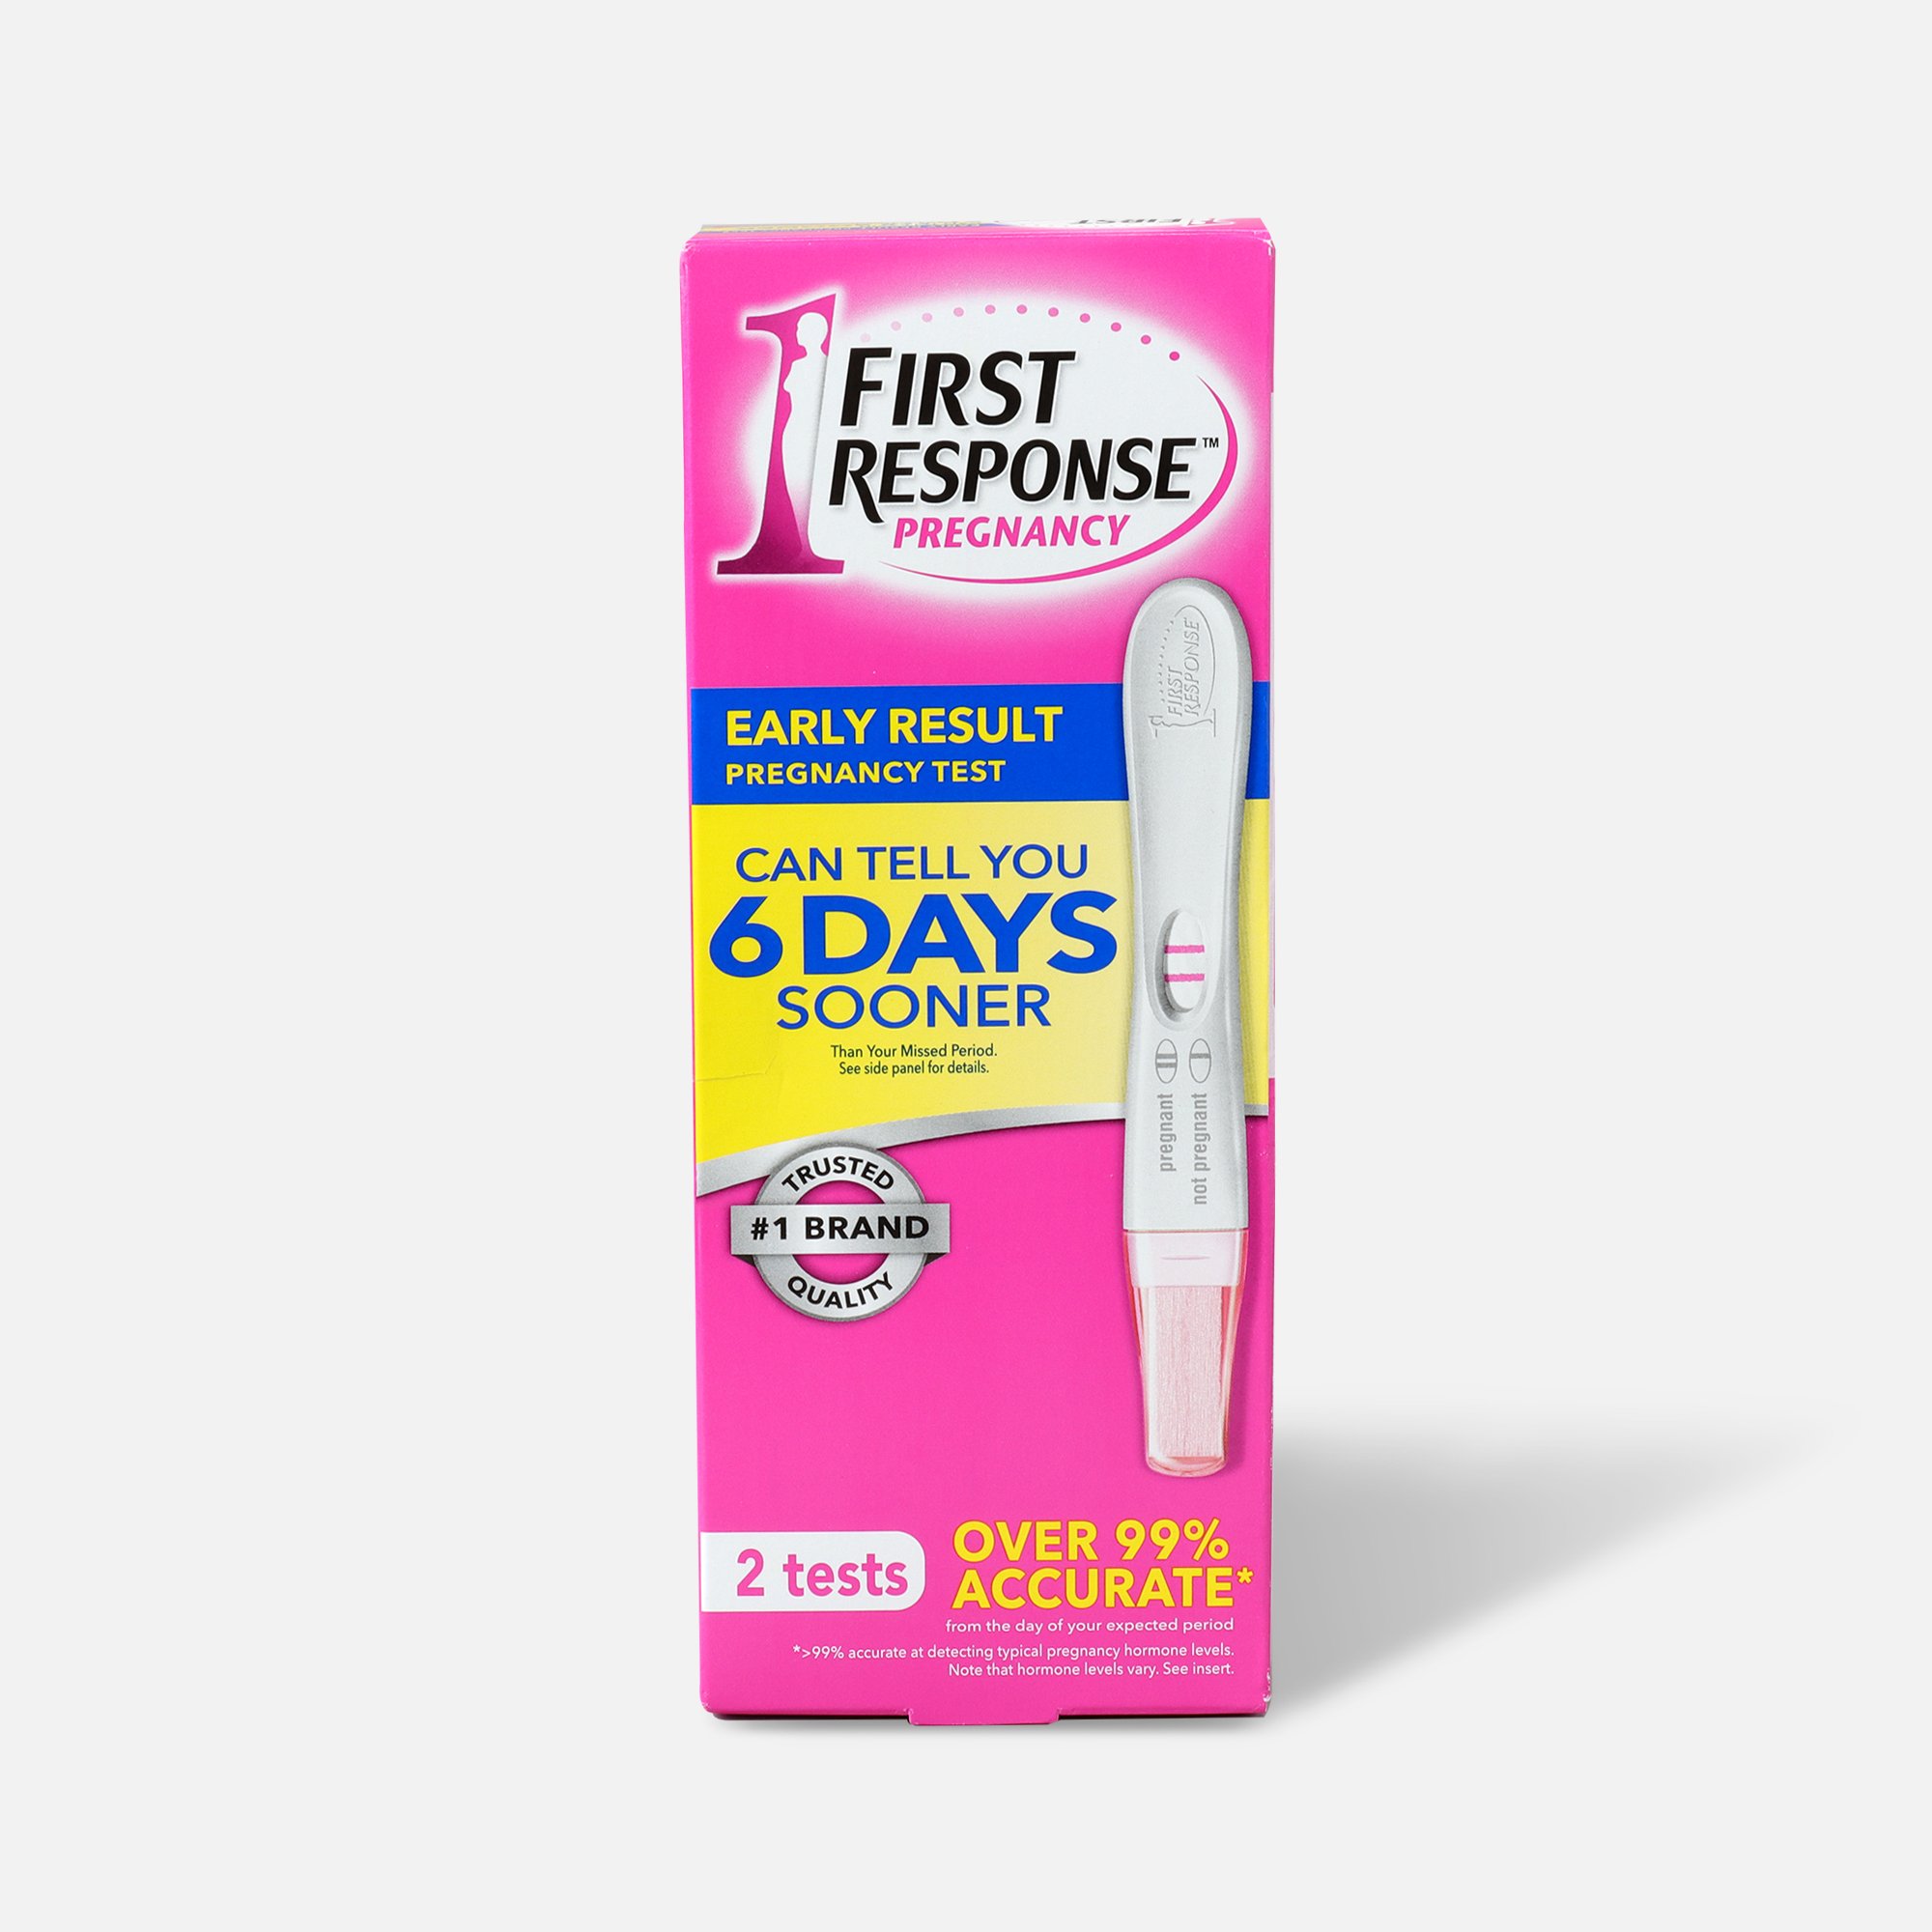 First Response Pregnancy US (@firstresponsepregnancy) • Instagram